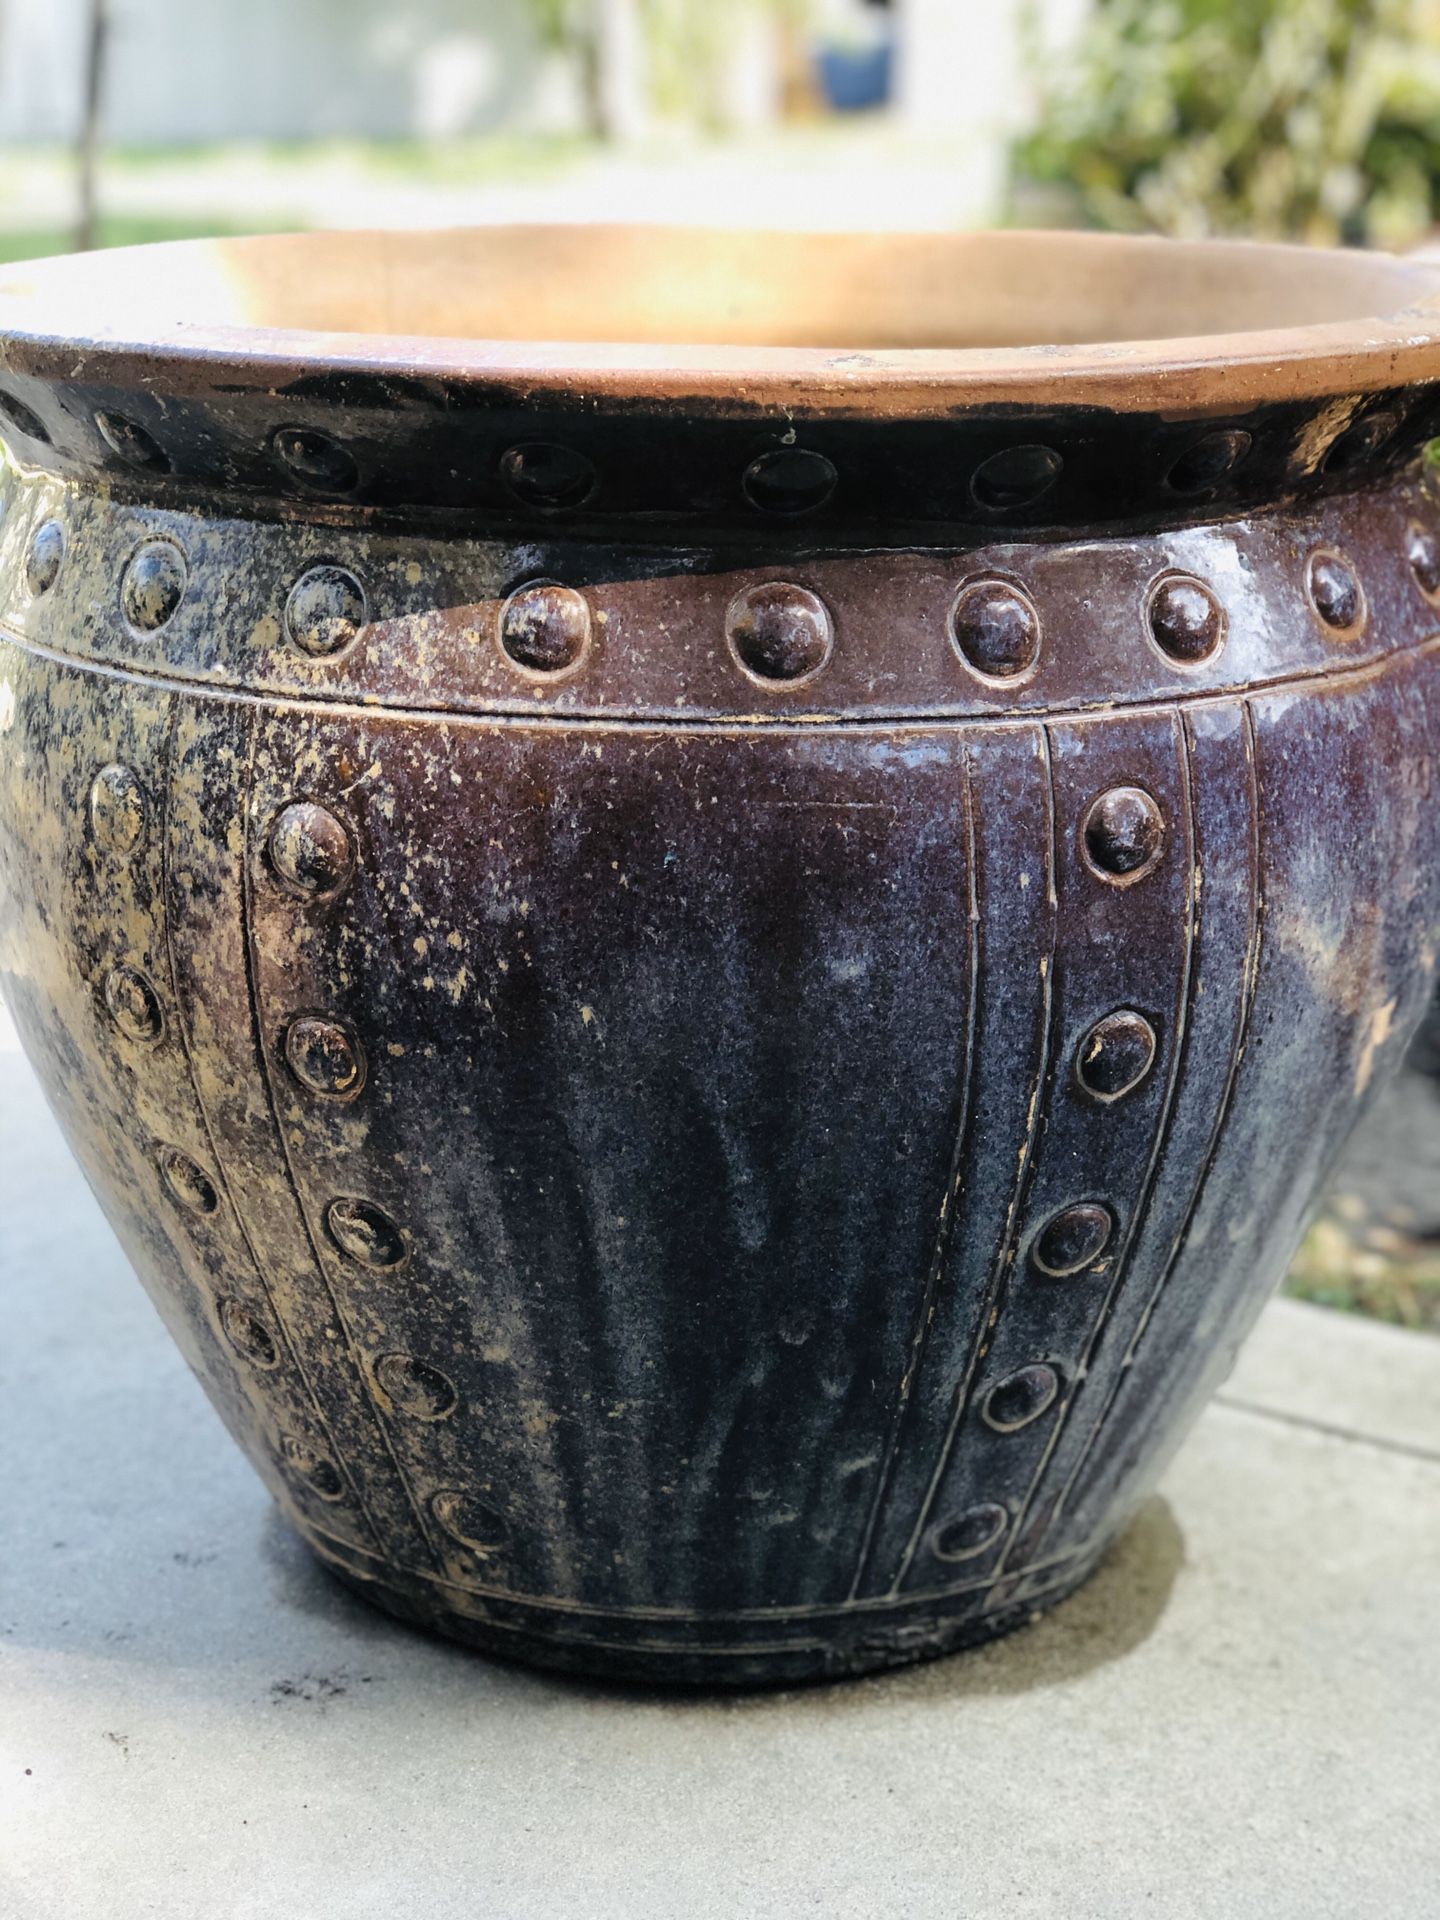 XXL Ceramic Pot with rustic look. Very heavy.